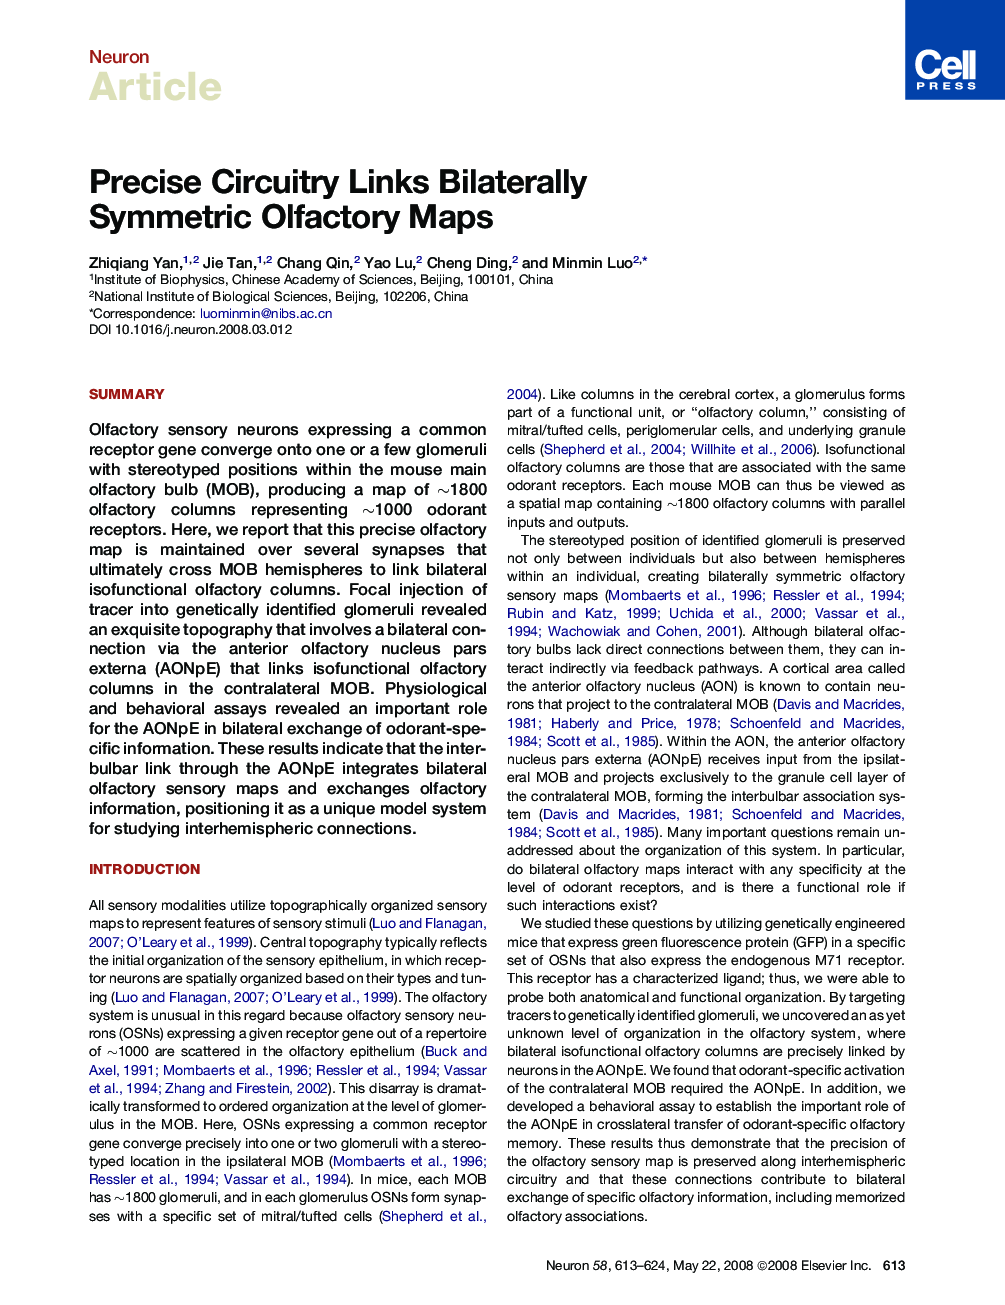 Precise Circuitry Links Bilaterally Symmetric Olfactory Maps